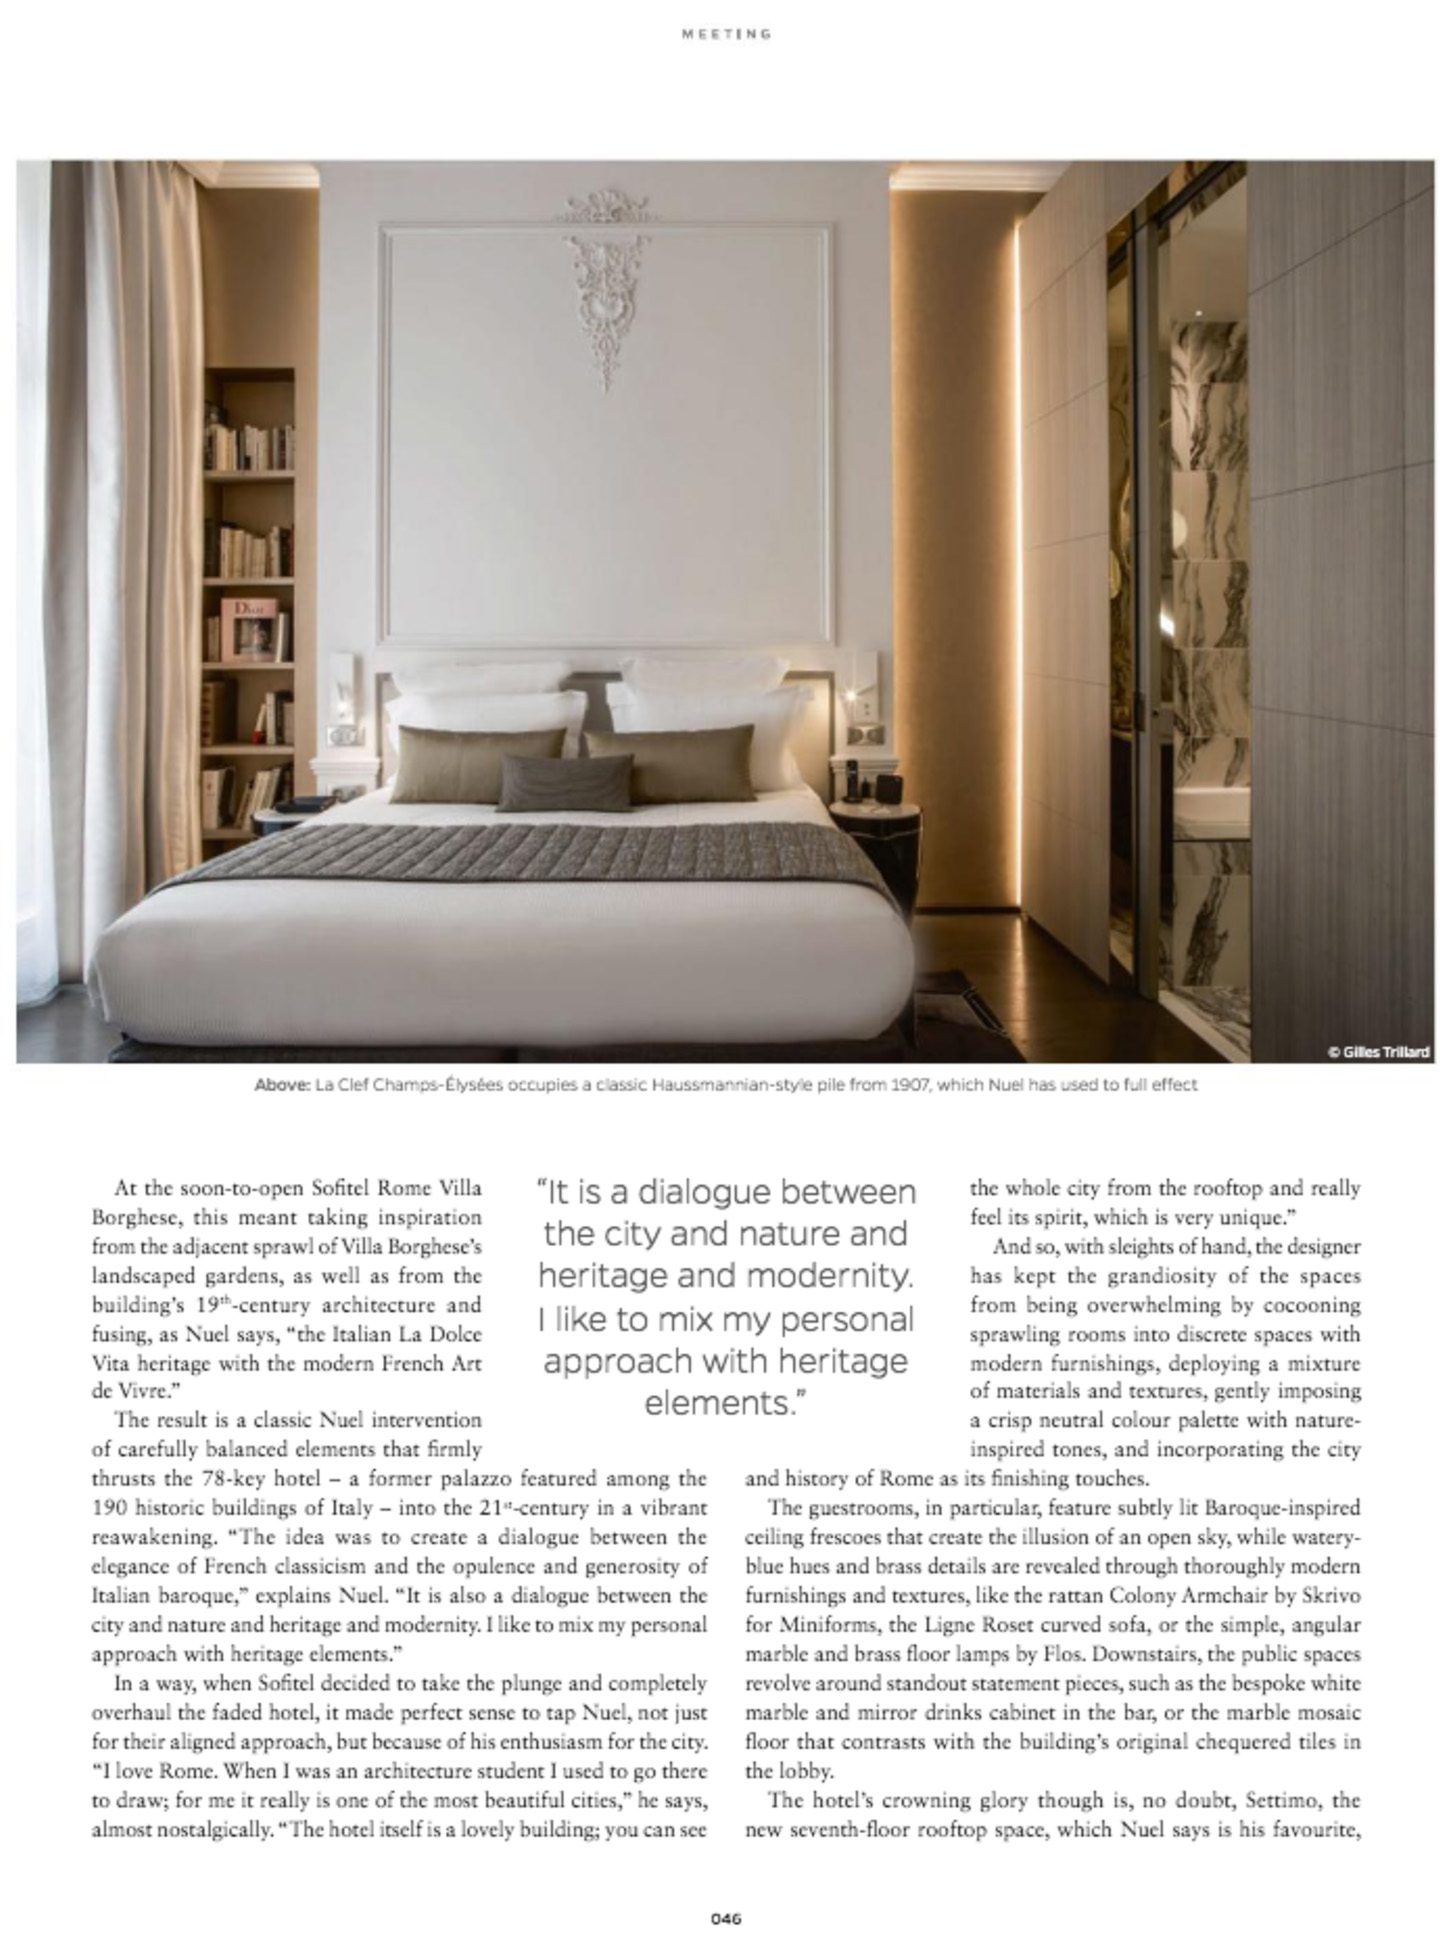 article on jean-philippe nuel in sleeper magazine and his interior design studio